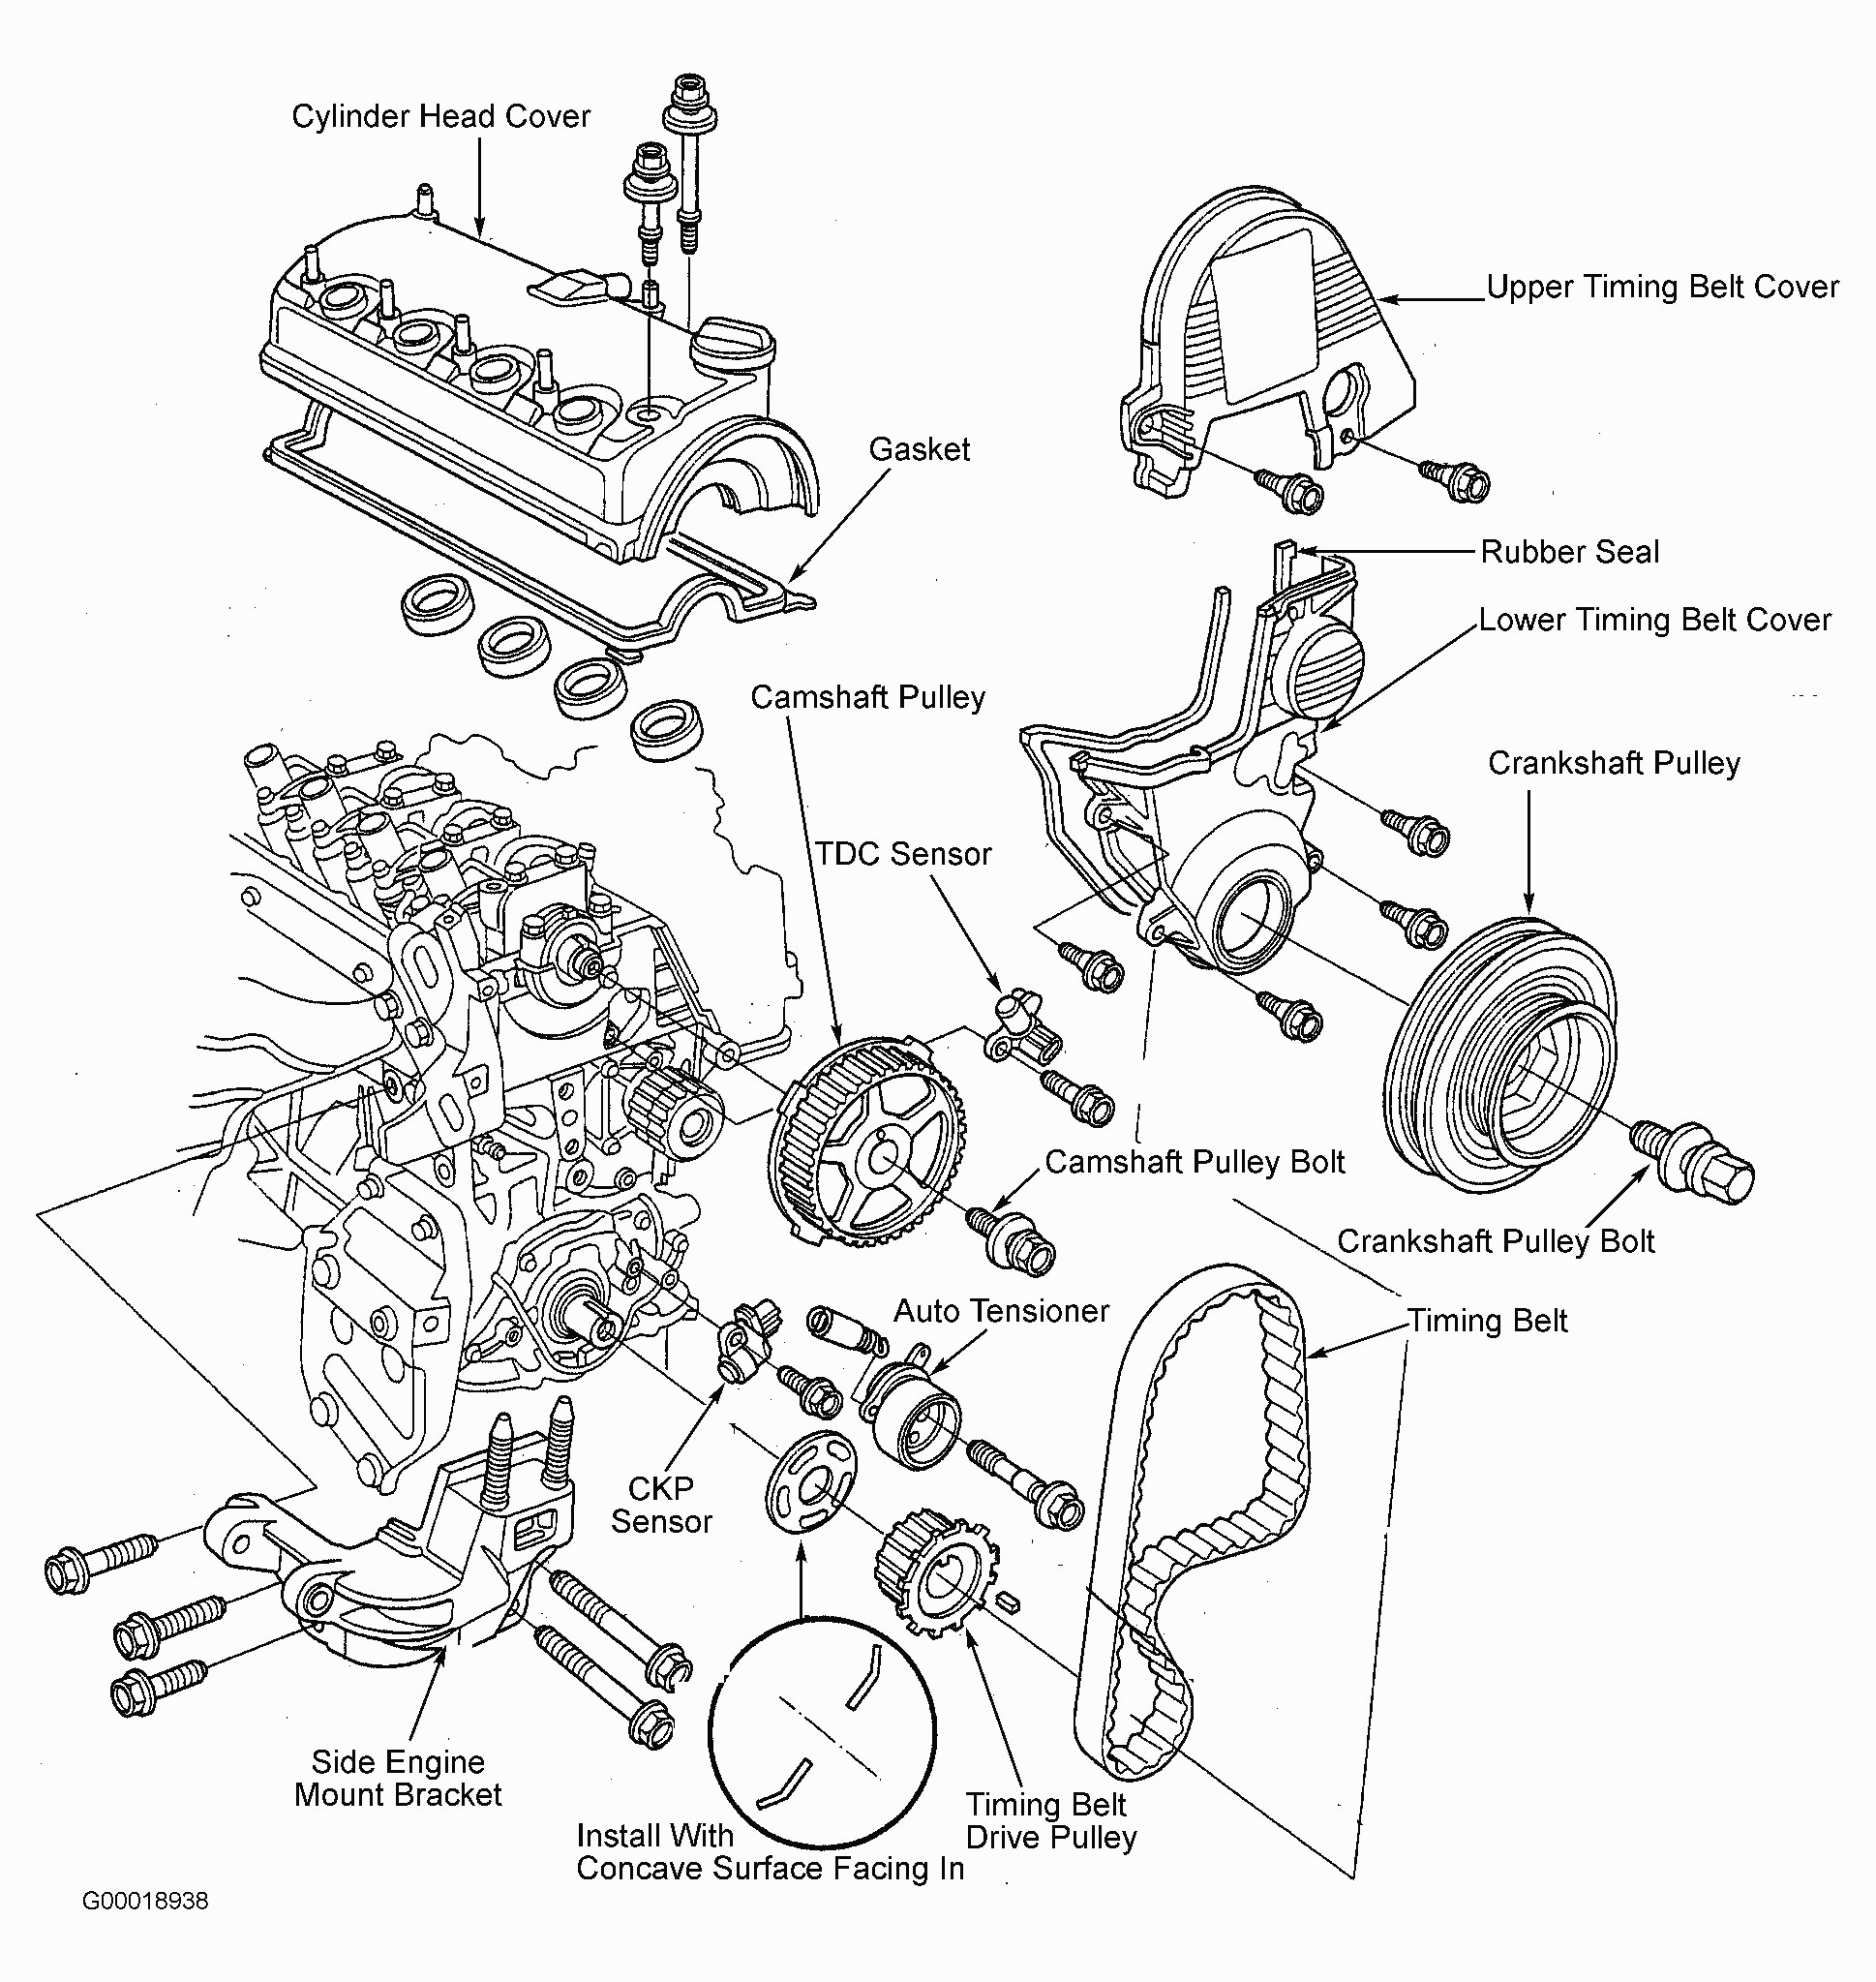 Hyundai Santa Fe Engine Diagram 48 Better Hyundai Santa Fe Timing Belt Graphy Of Hyundai Santa Fe Engine Diagram